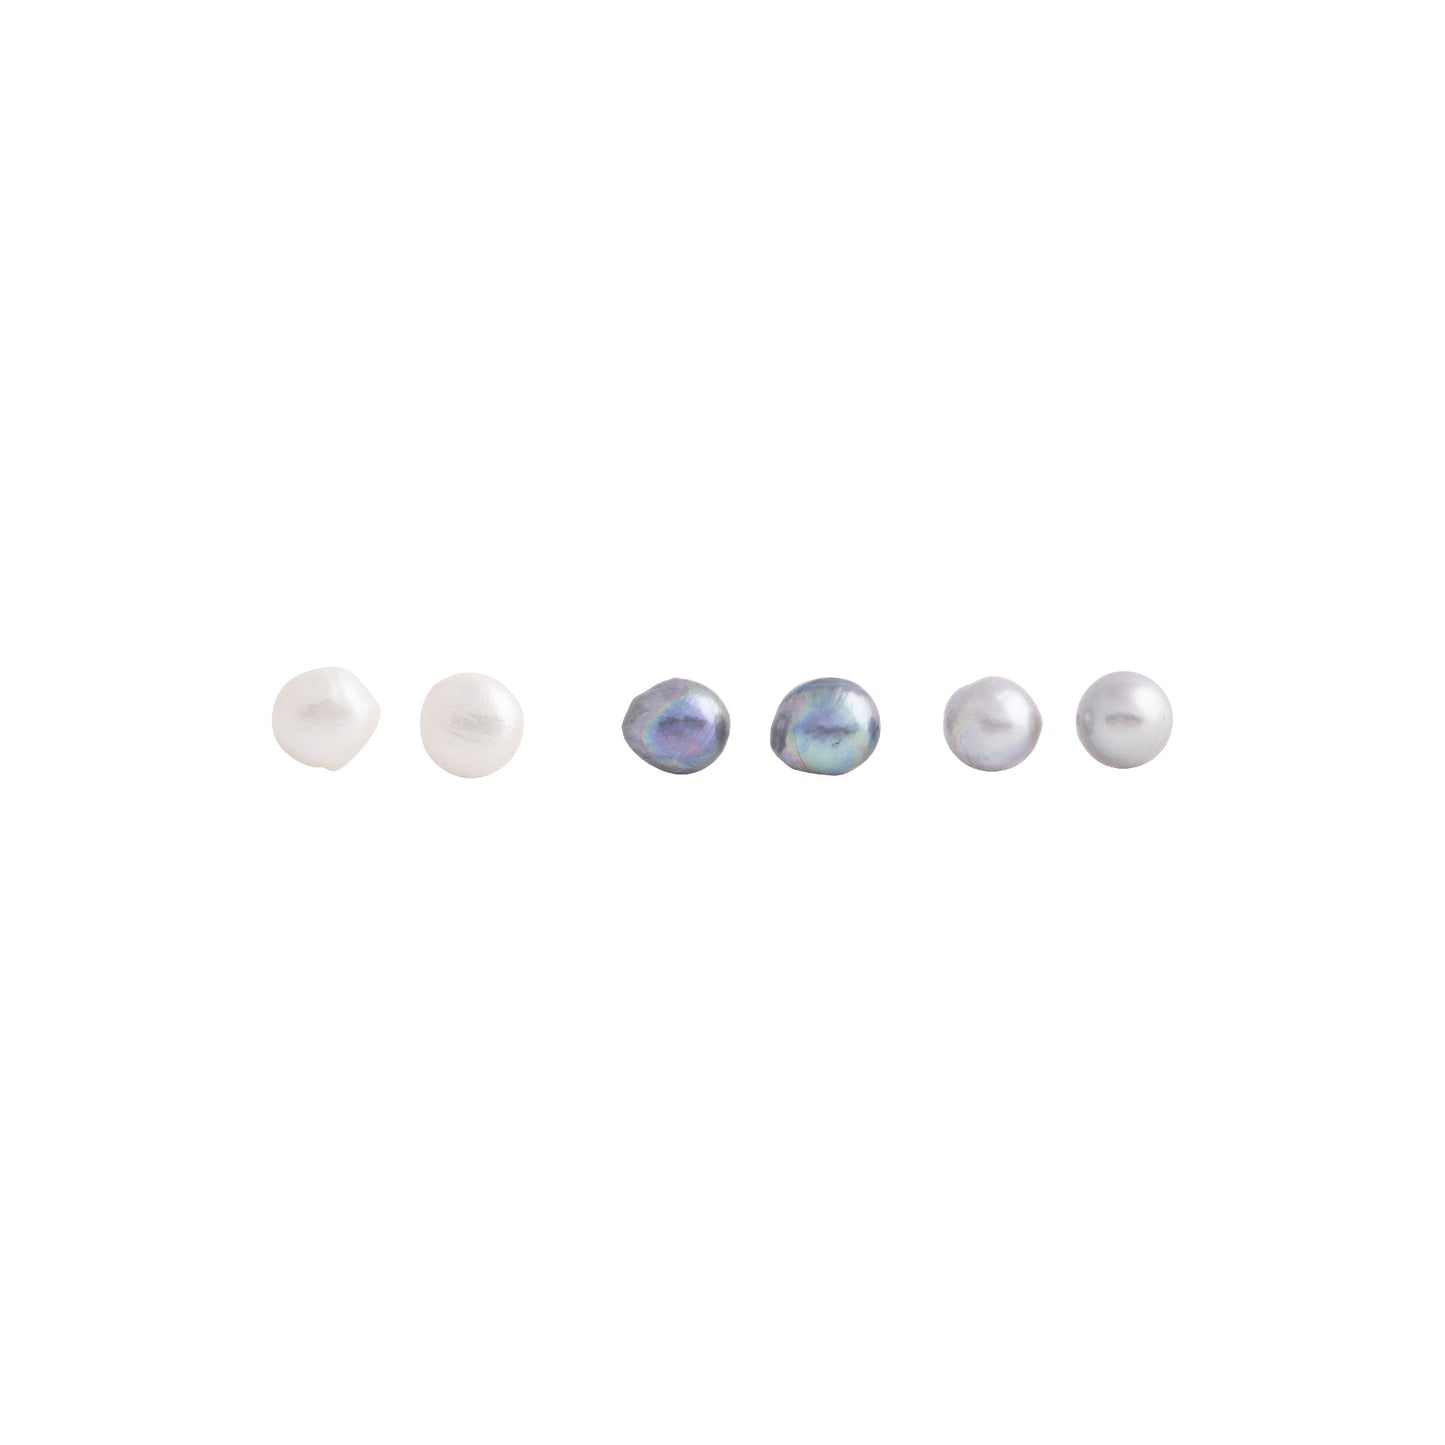 Elara - Large (12 - 15mm) pearl nickle-free earrings (White, dark grey and silver pearls)